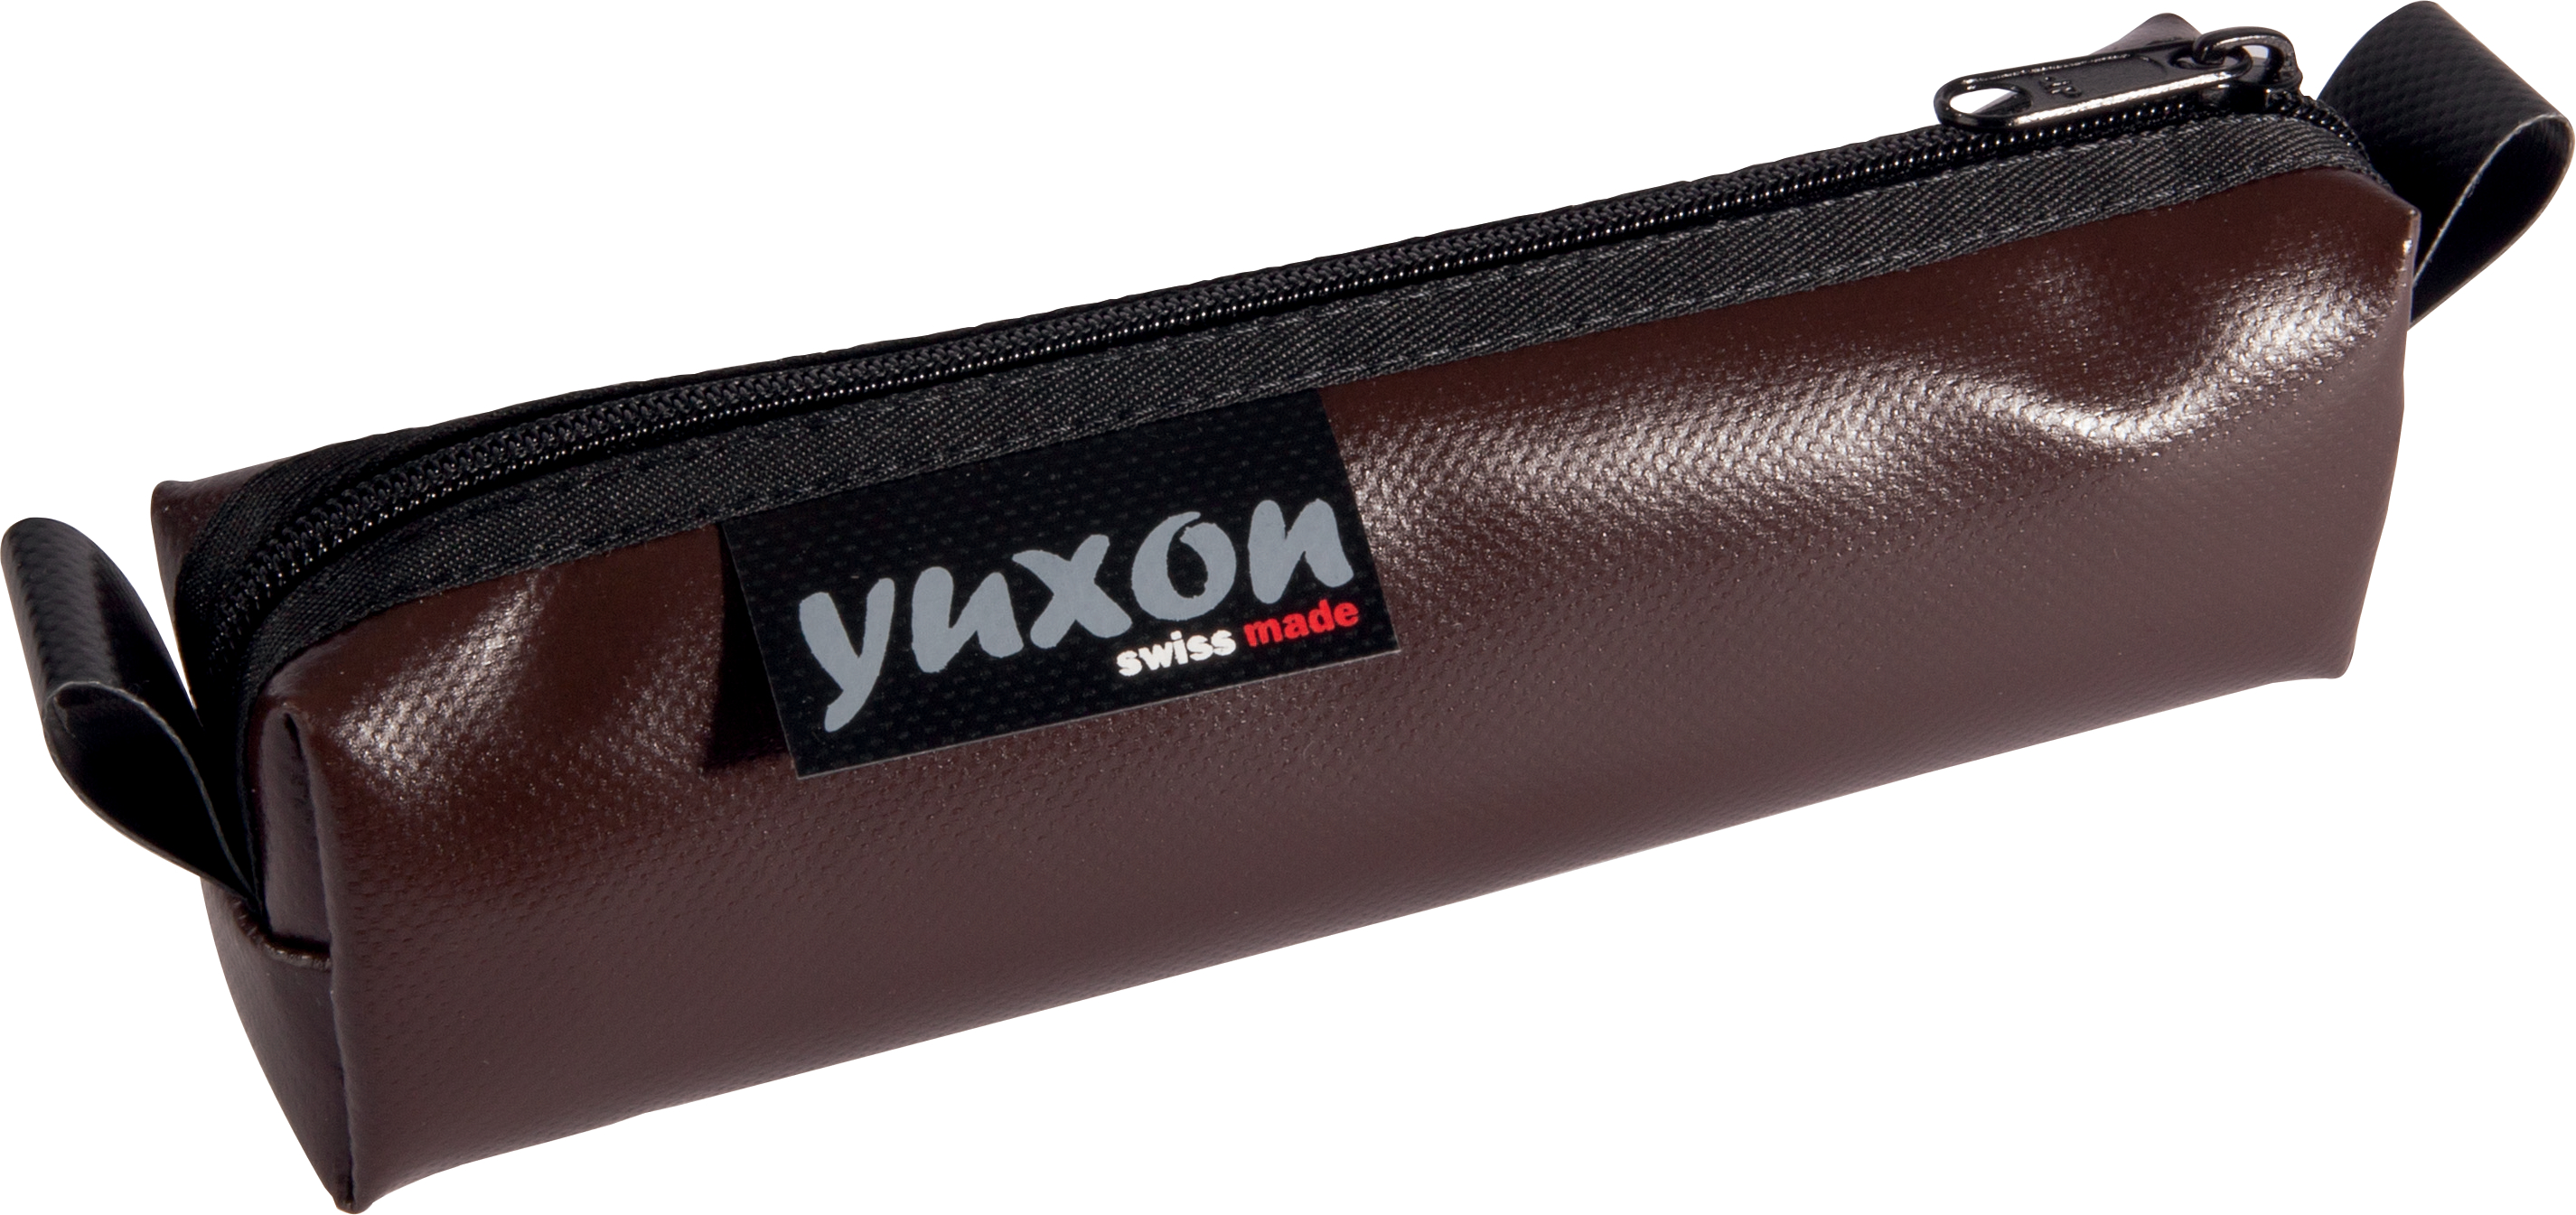 YUXON Trousse Midi 8910.16 brun